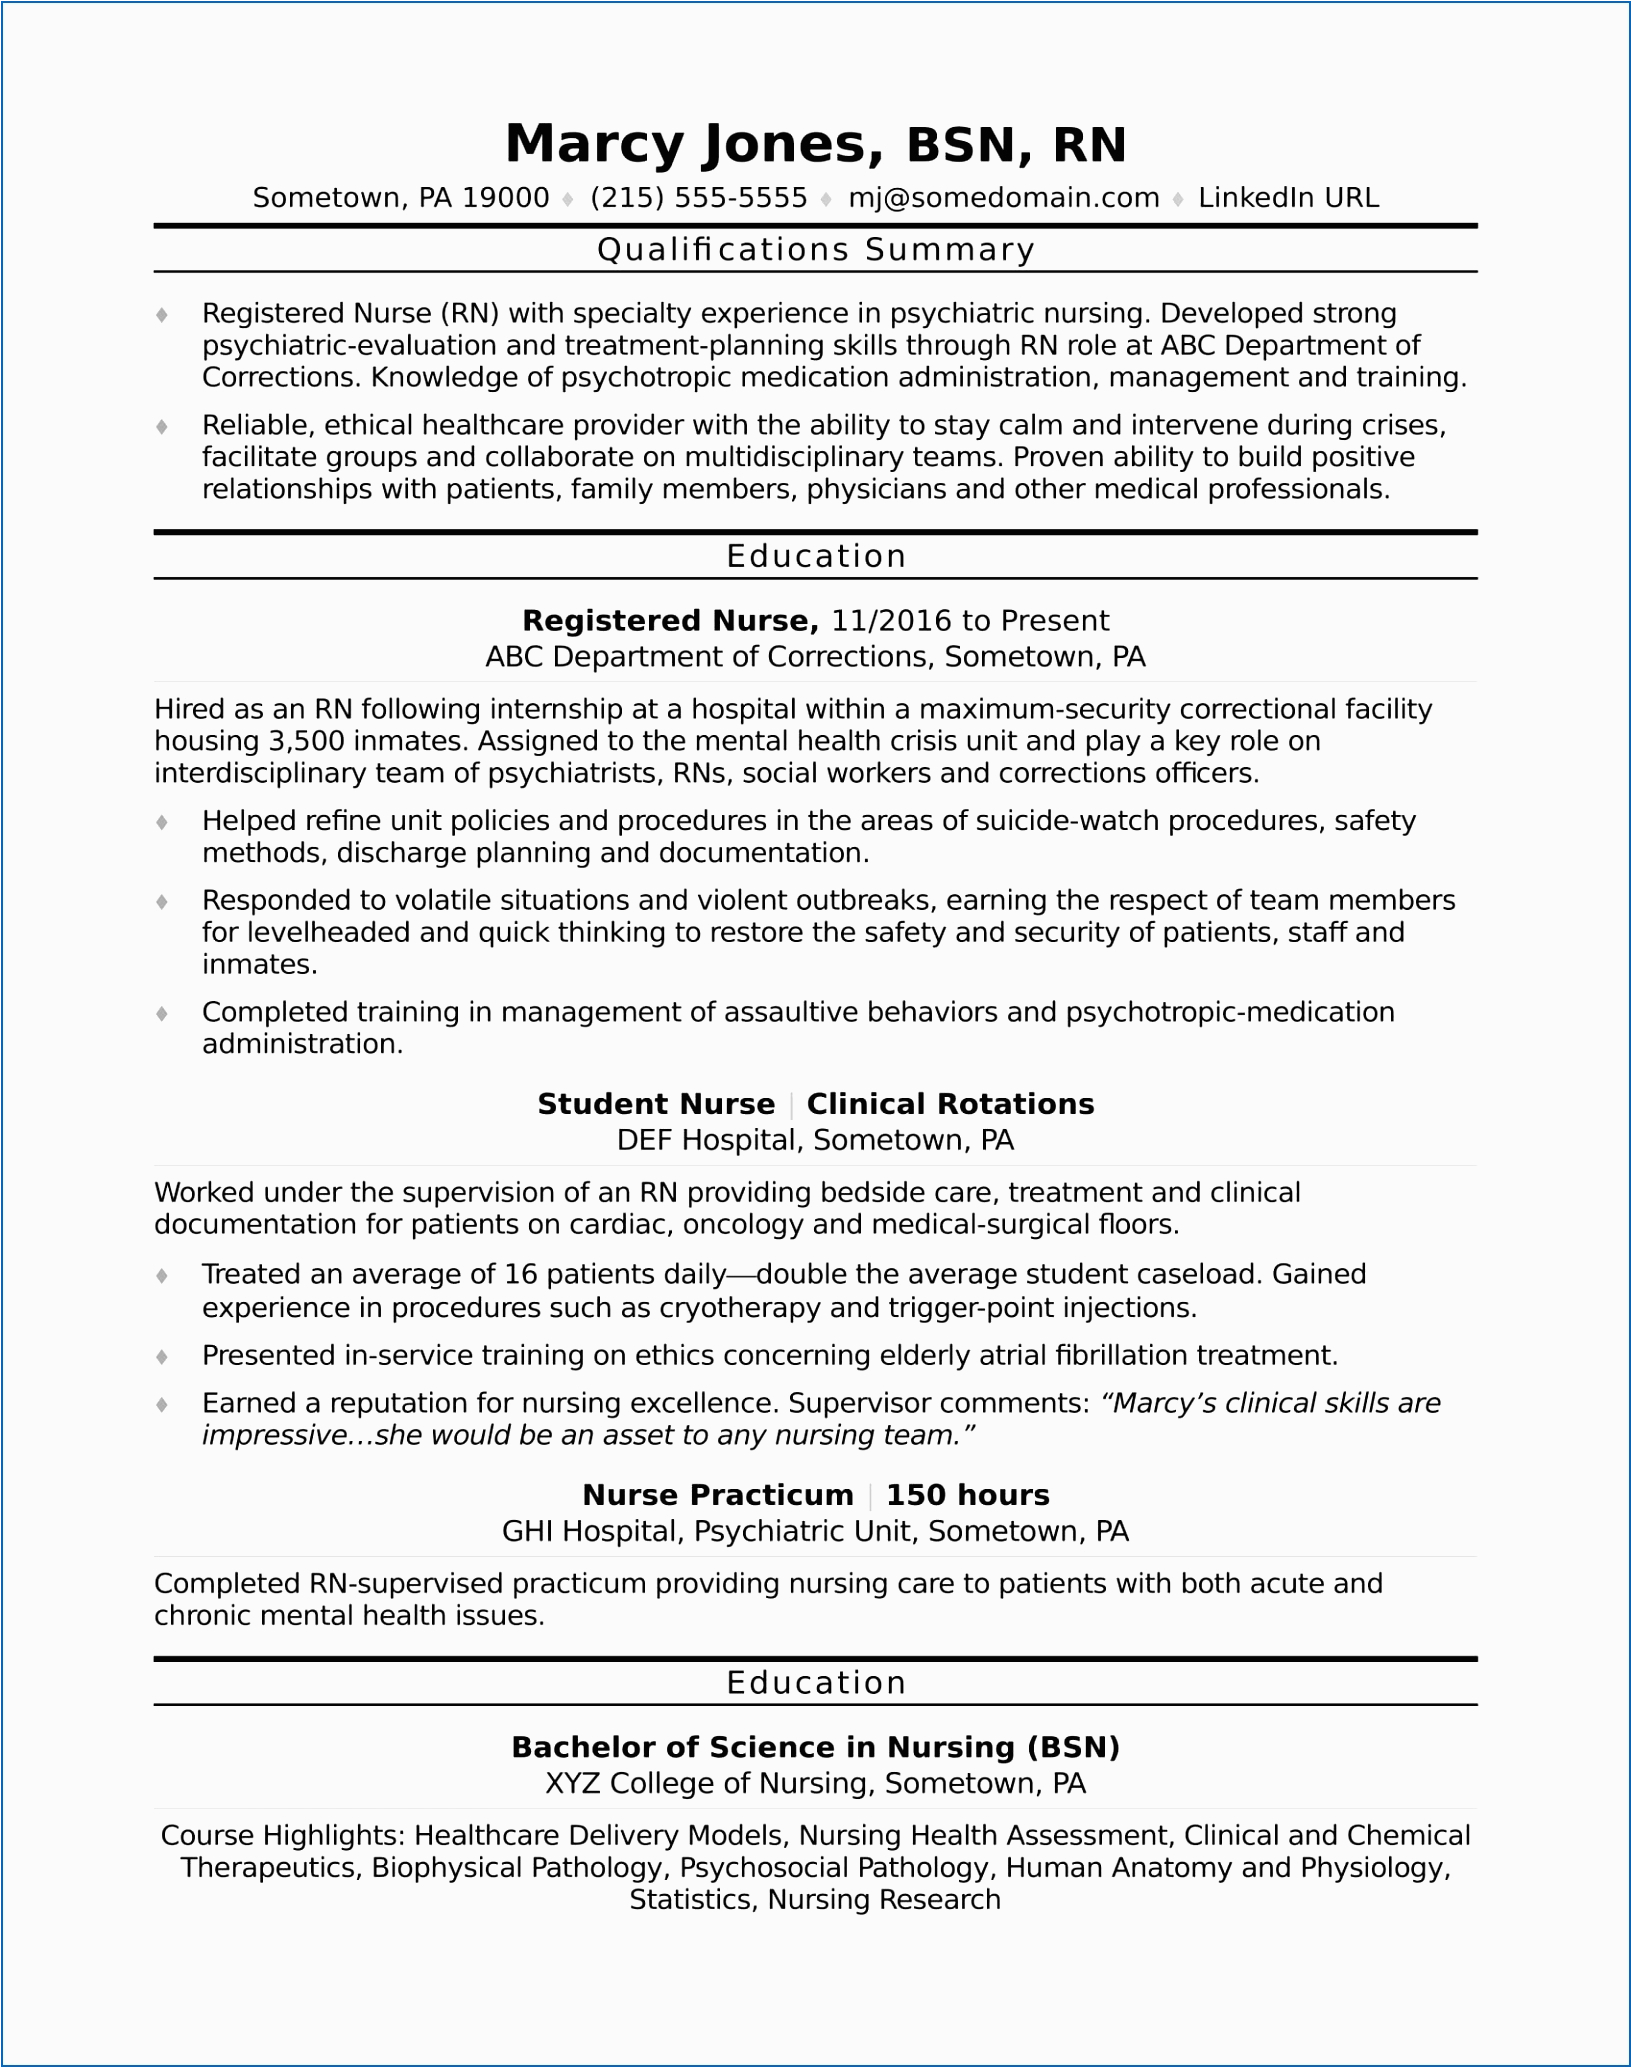 Sample Professional Summary for Nursing Resume 12 Professional Summary Examples for Nurses Radaircars